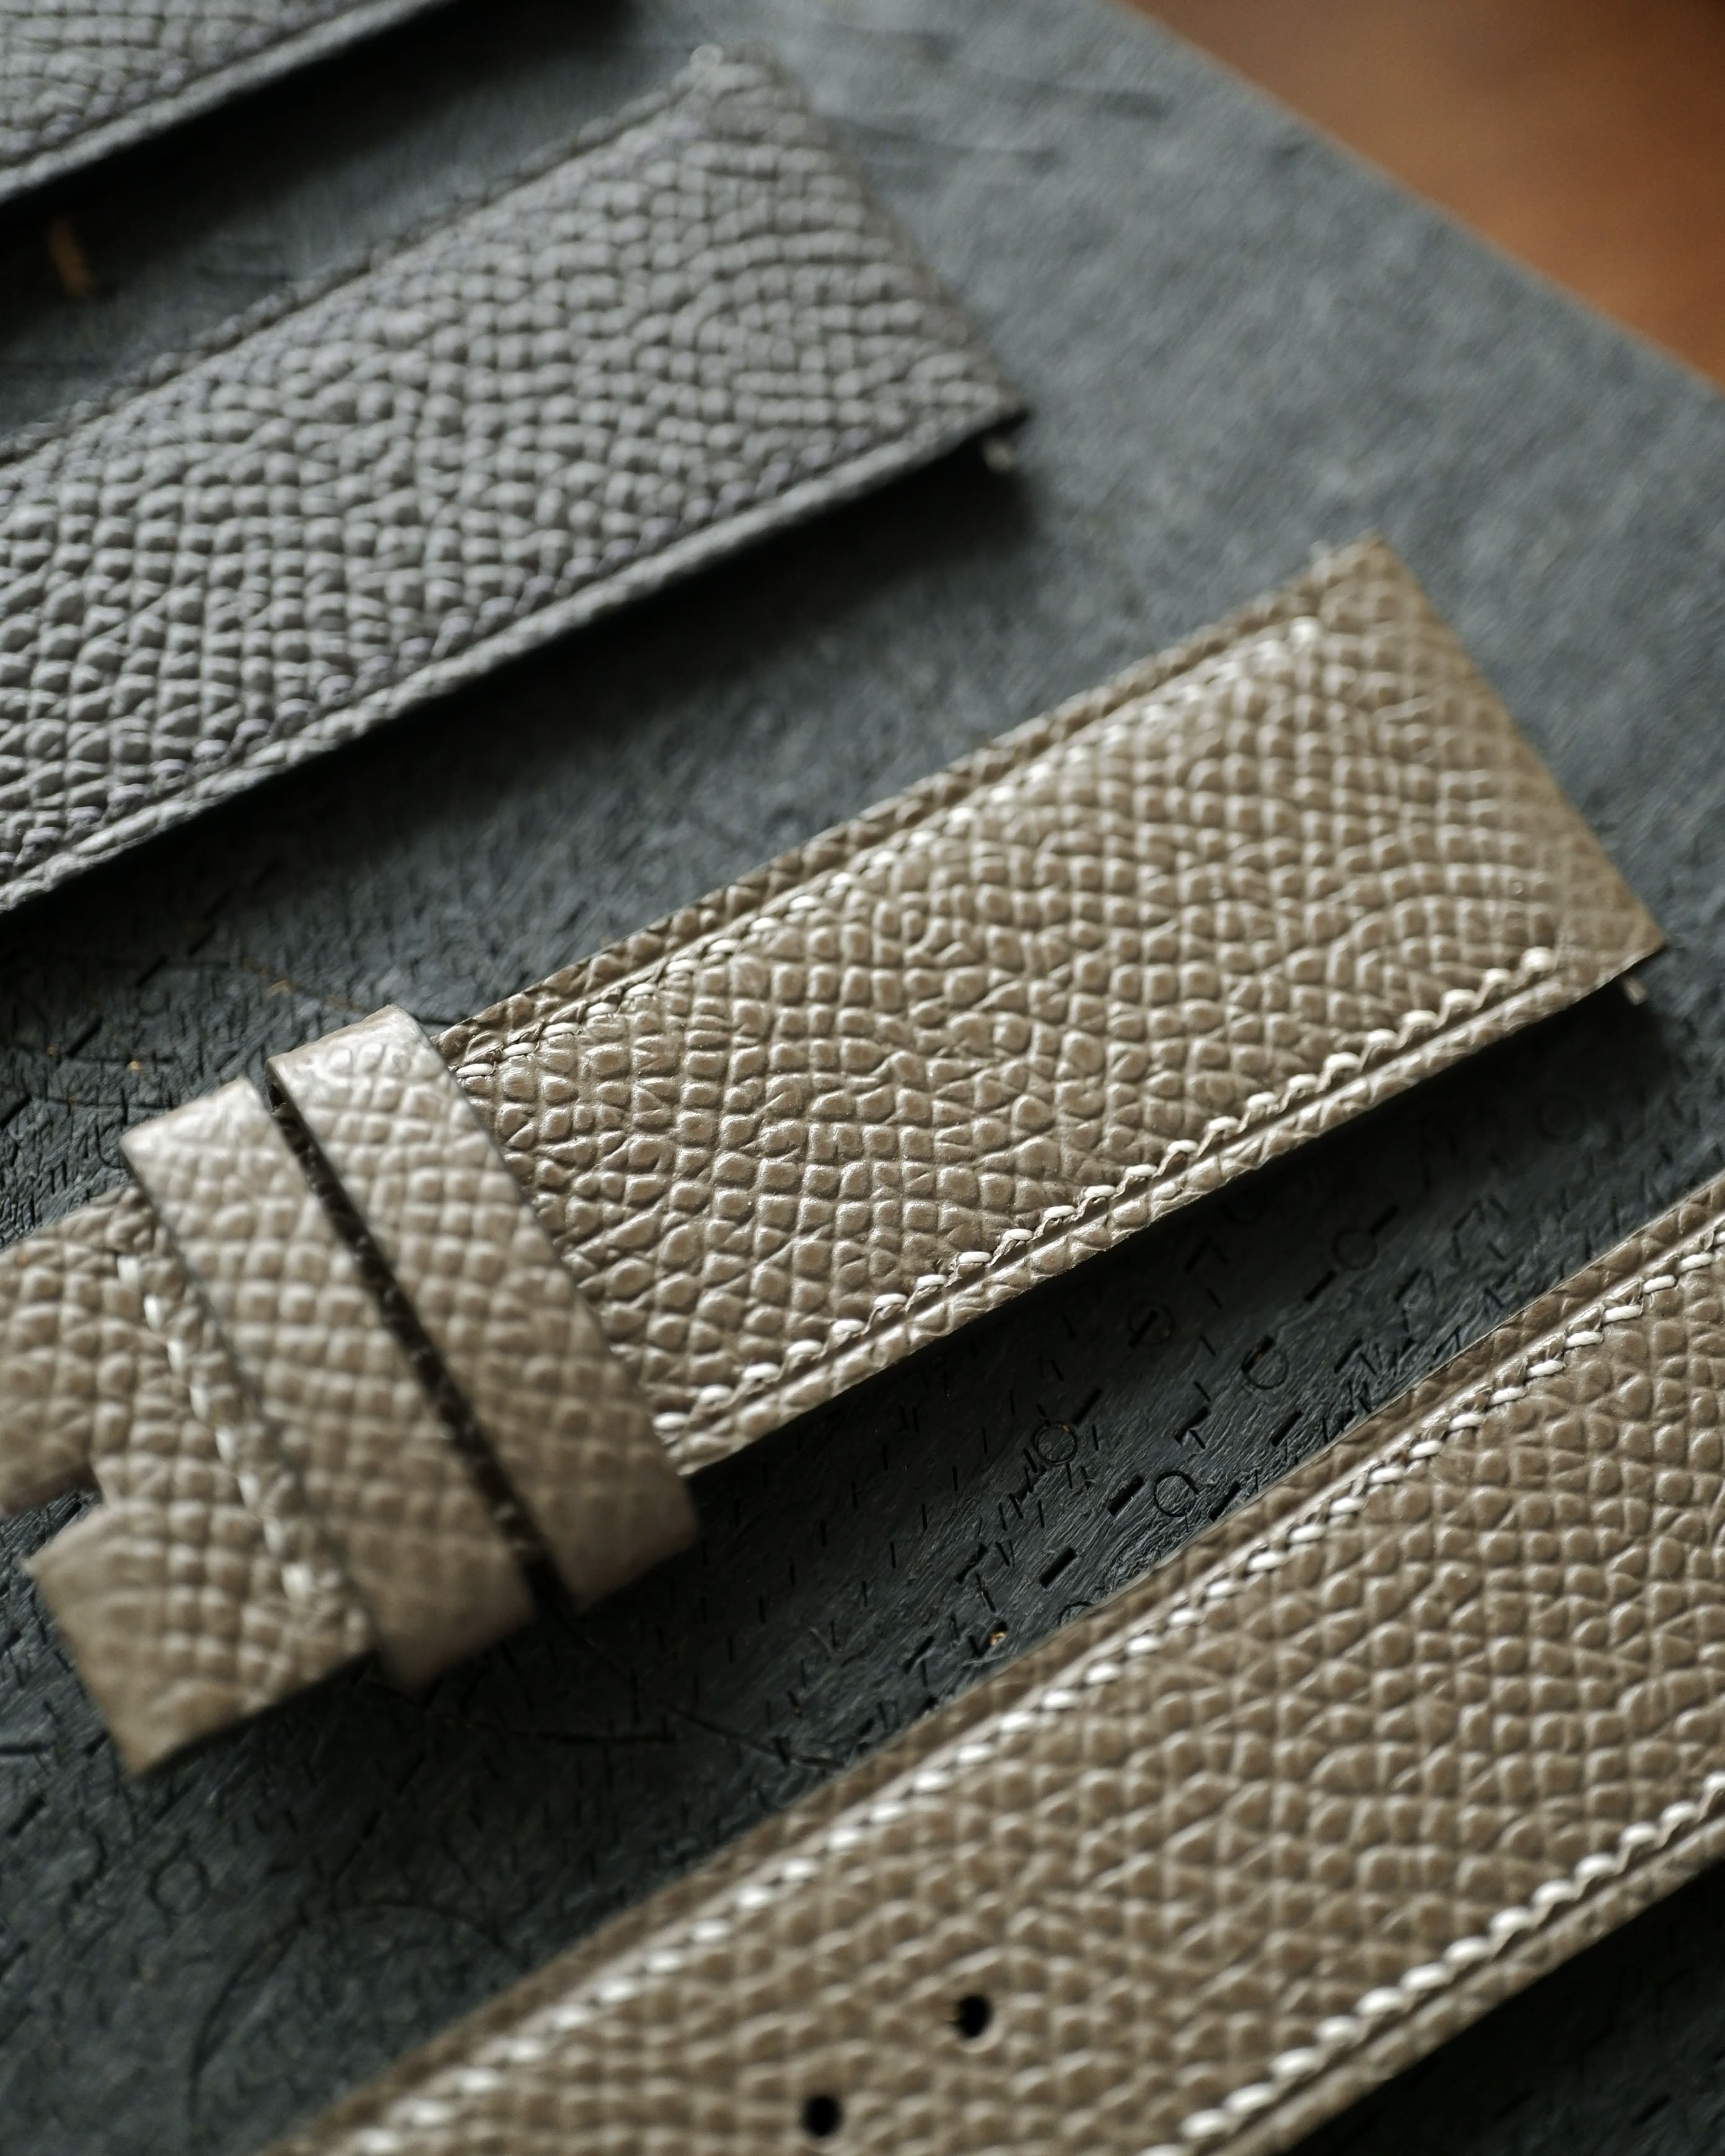 Bespoke Epsom Leather Watch Strap